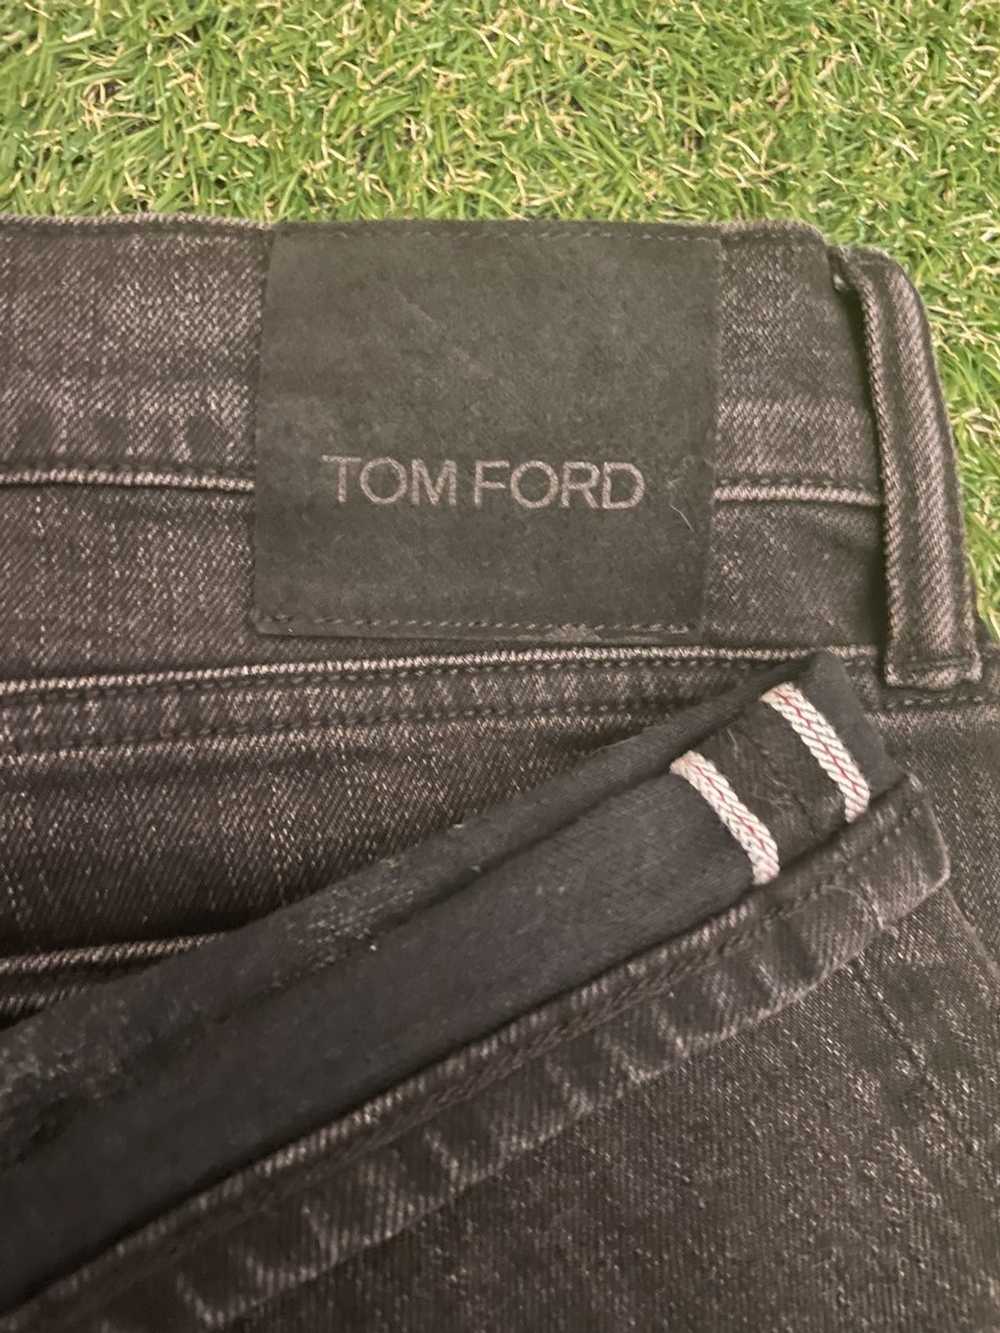 Tom Ford Tom Ford Black Denim Jean - image 3